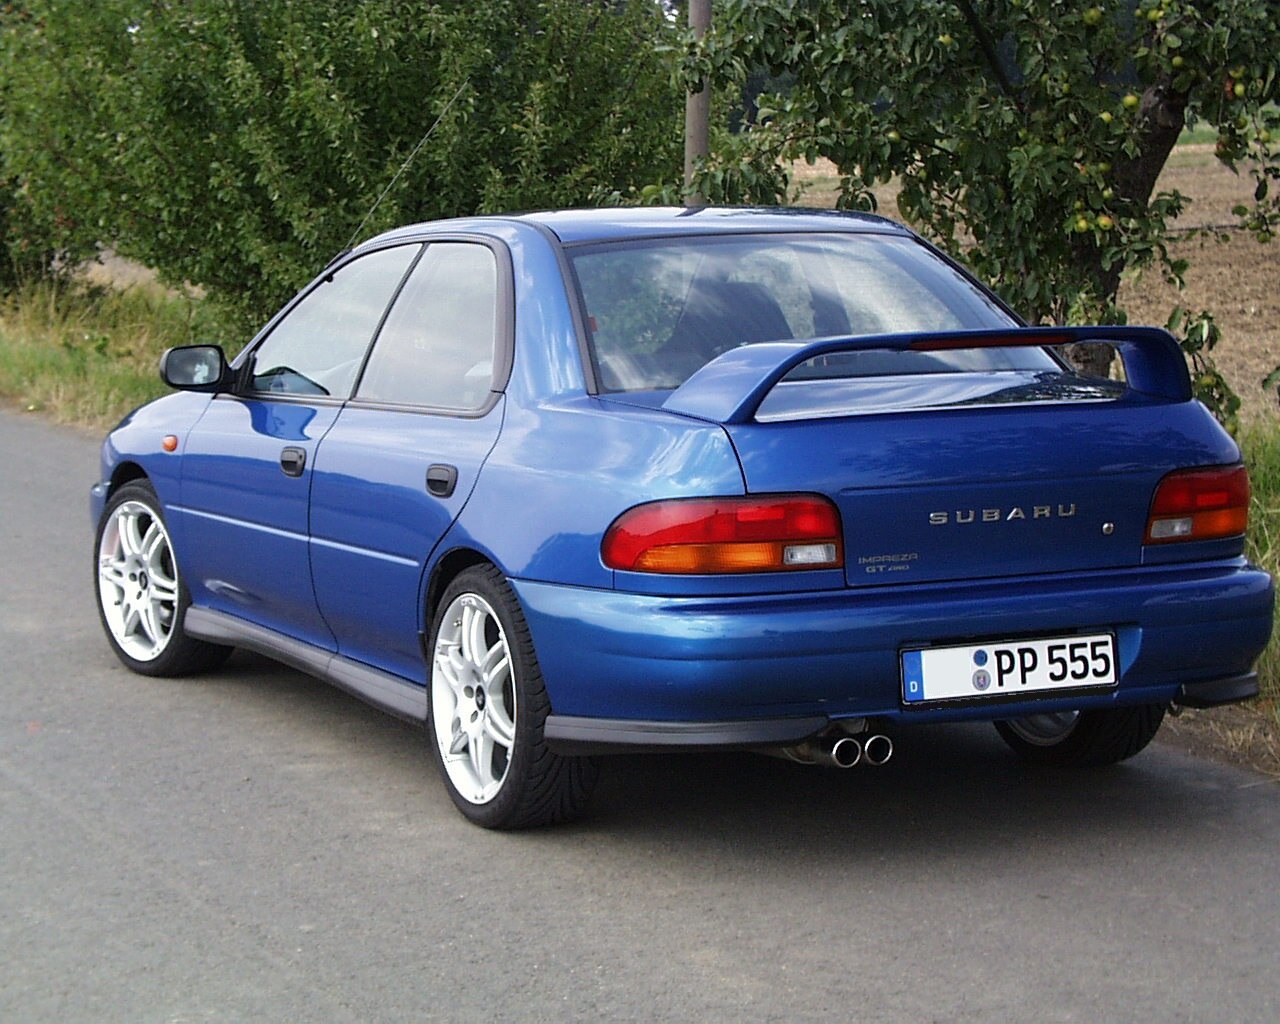 Image of Subaru Impreza 2.0 GT (Modelljahr 1999)